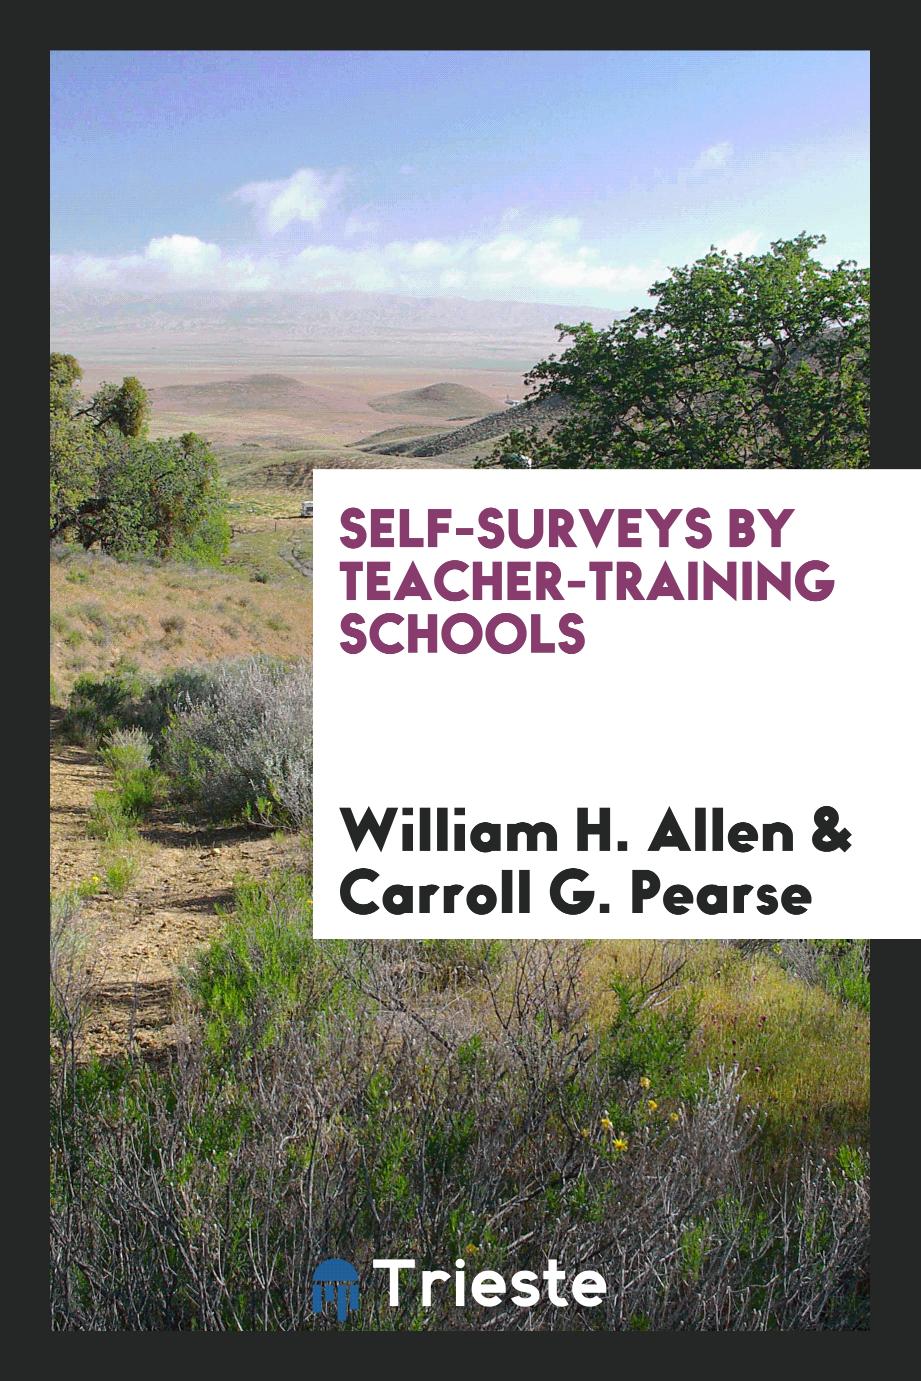 Self-surveys by teacher-training schools